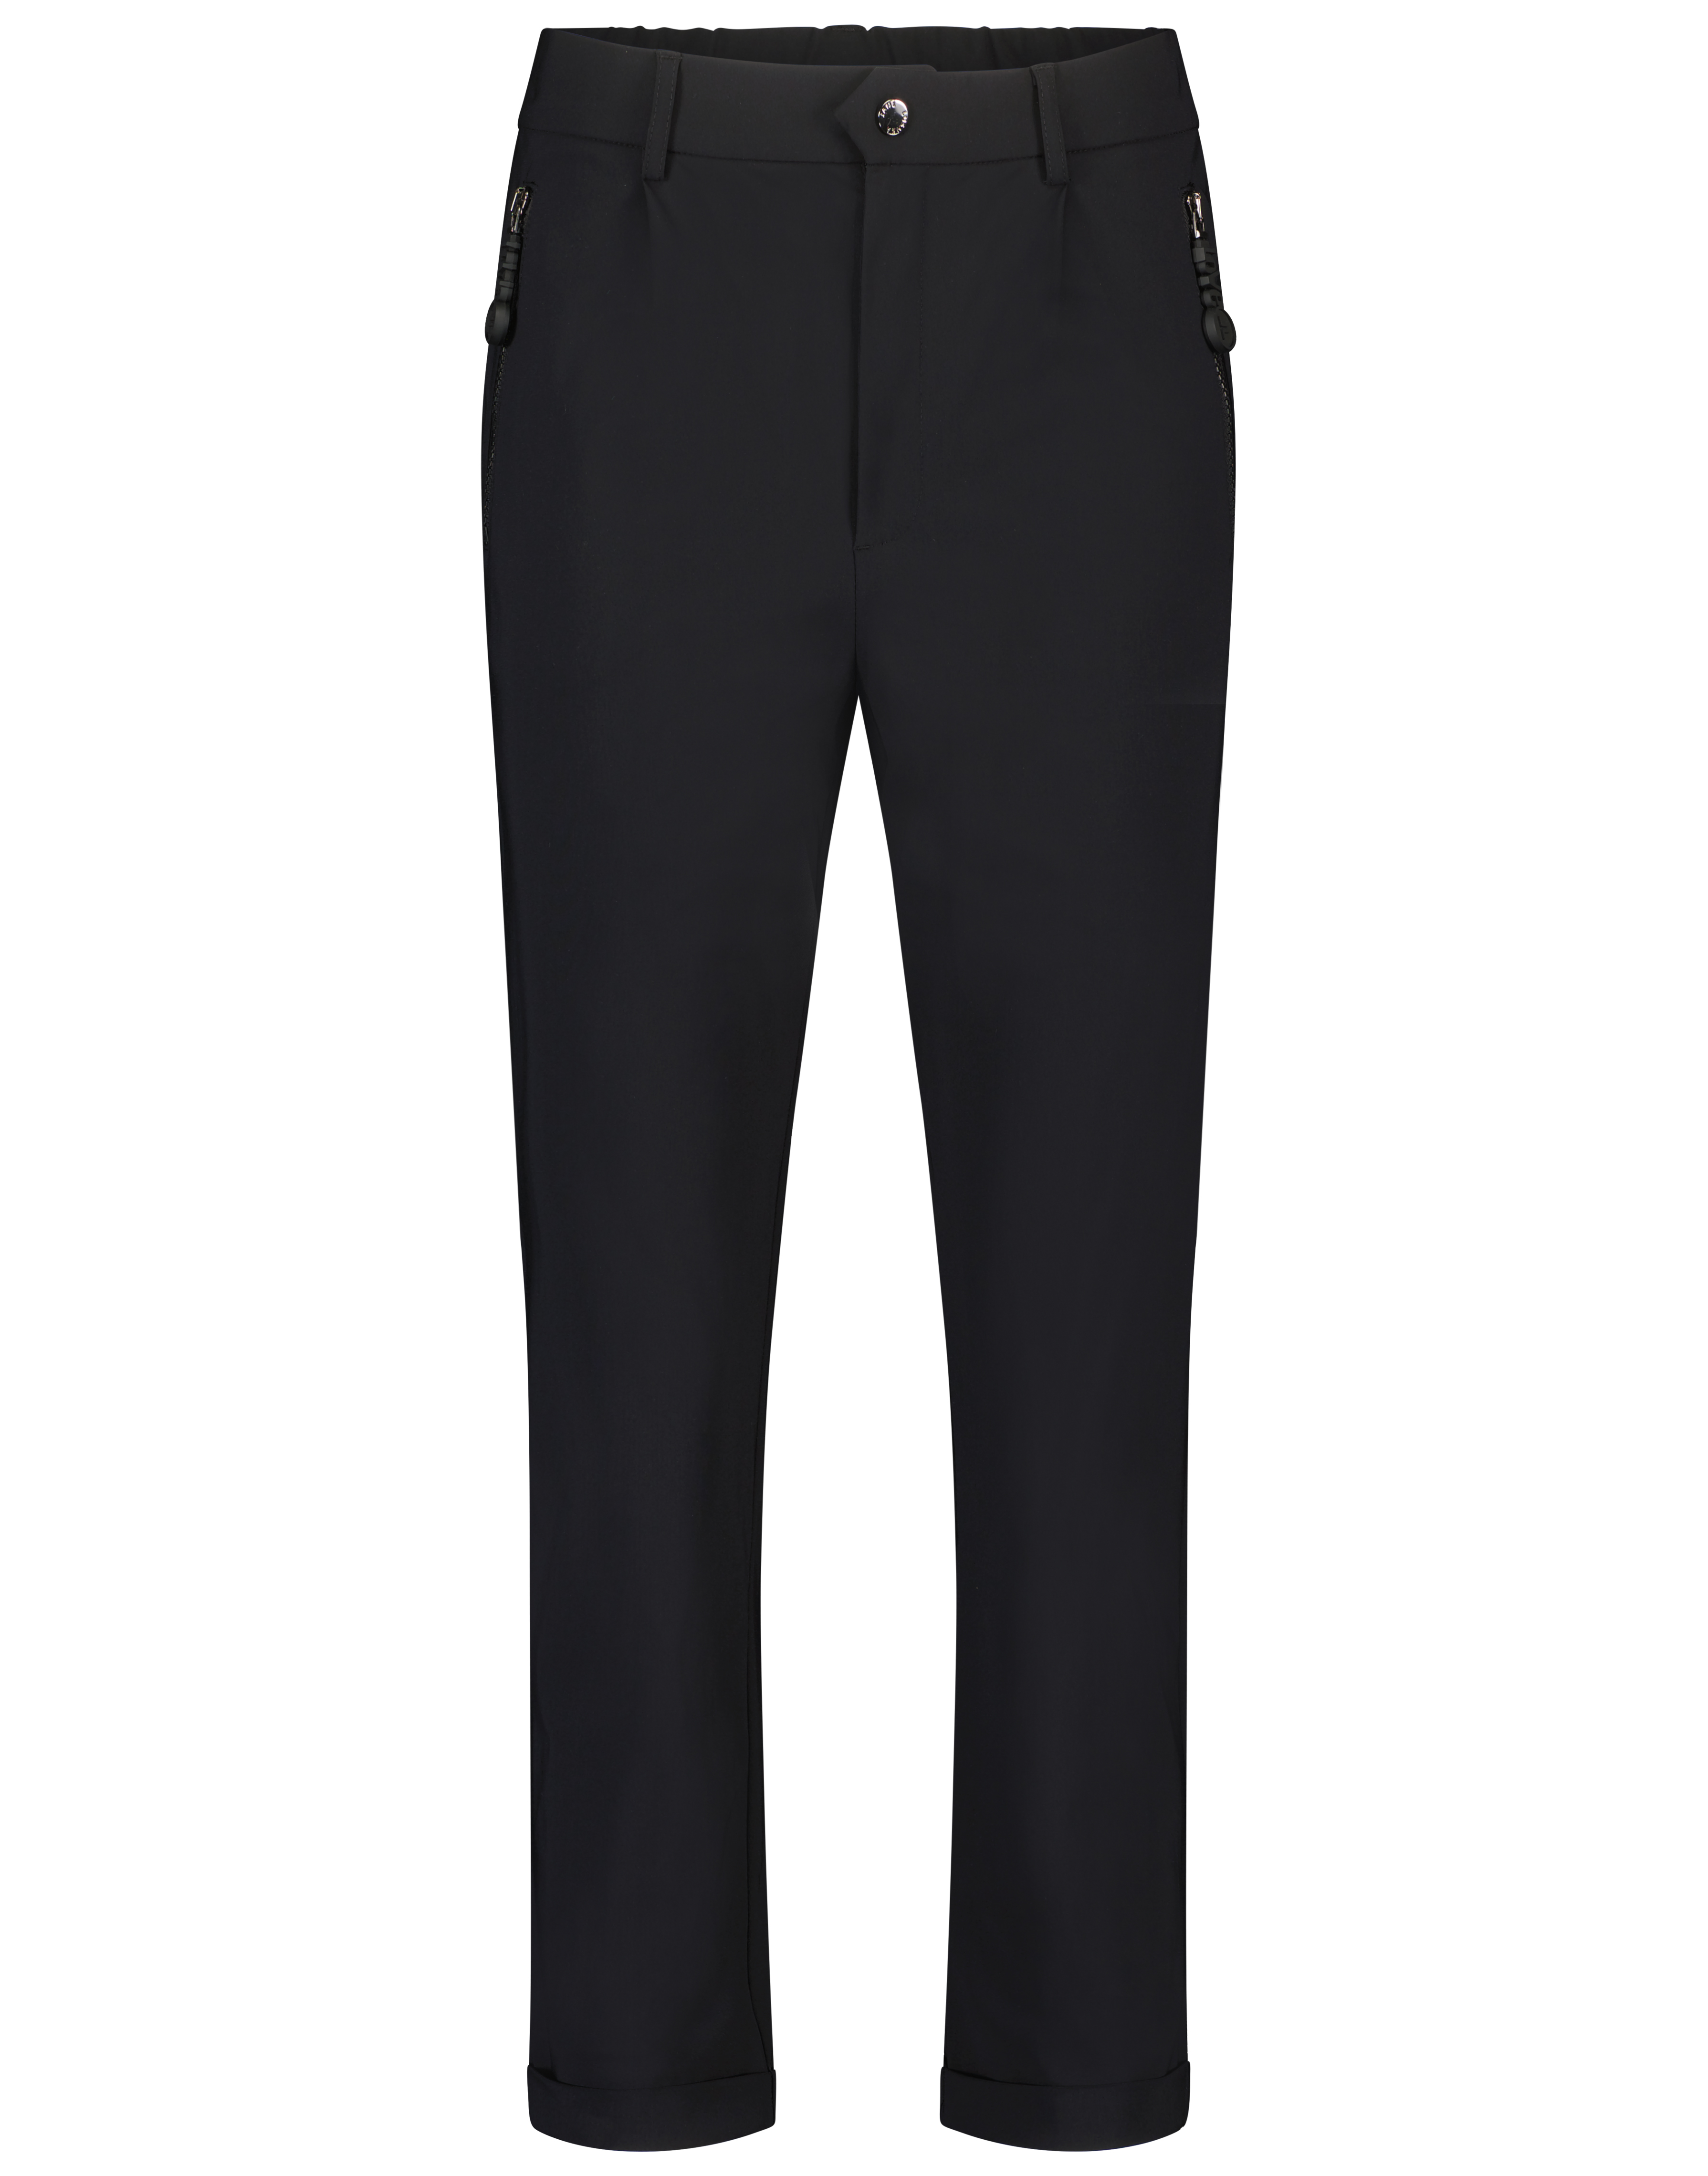 Pants Oslo/NZ Technical Jersey